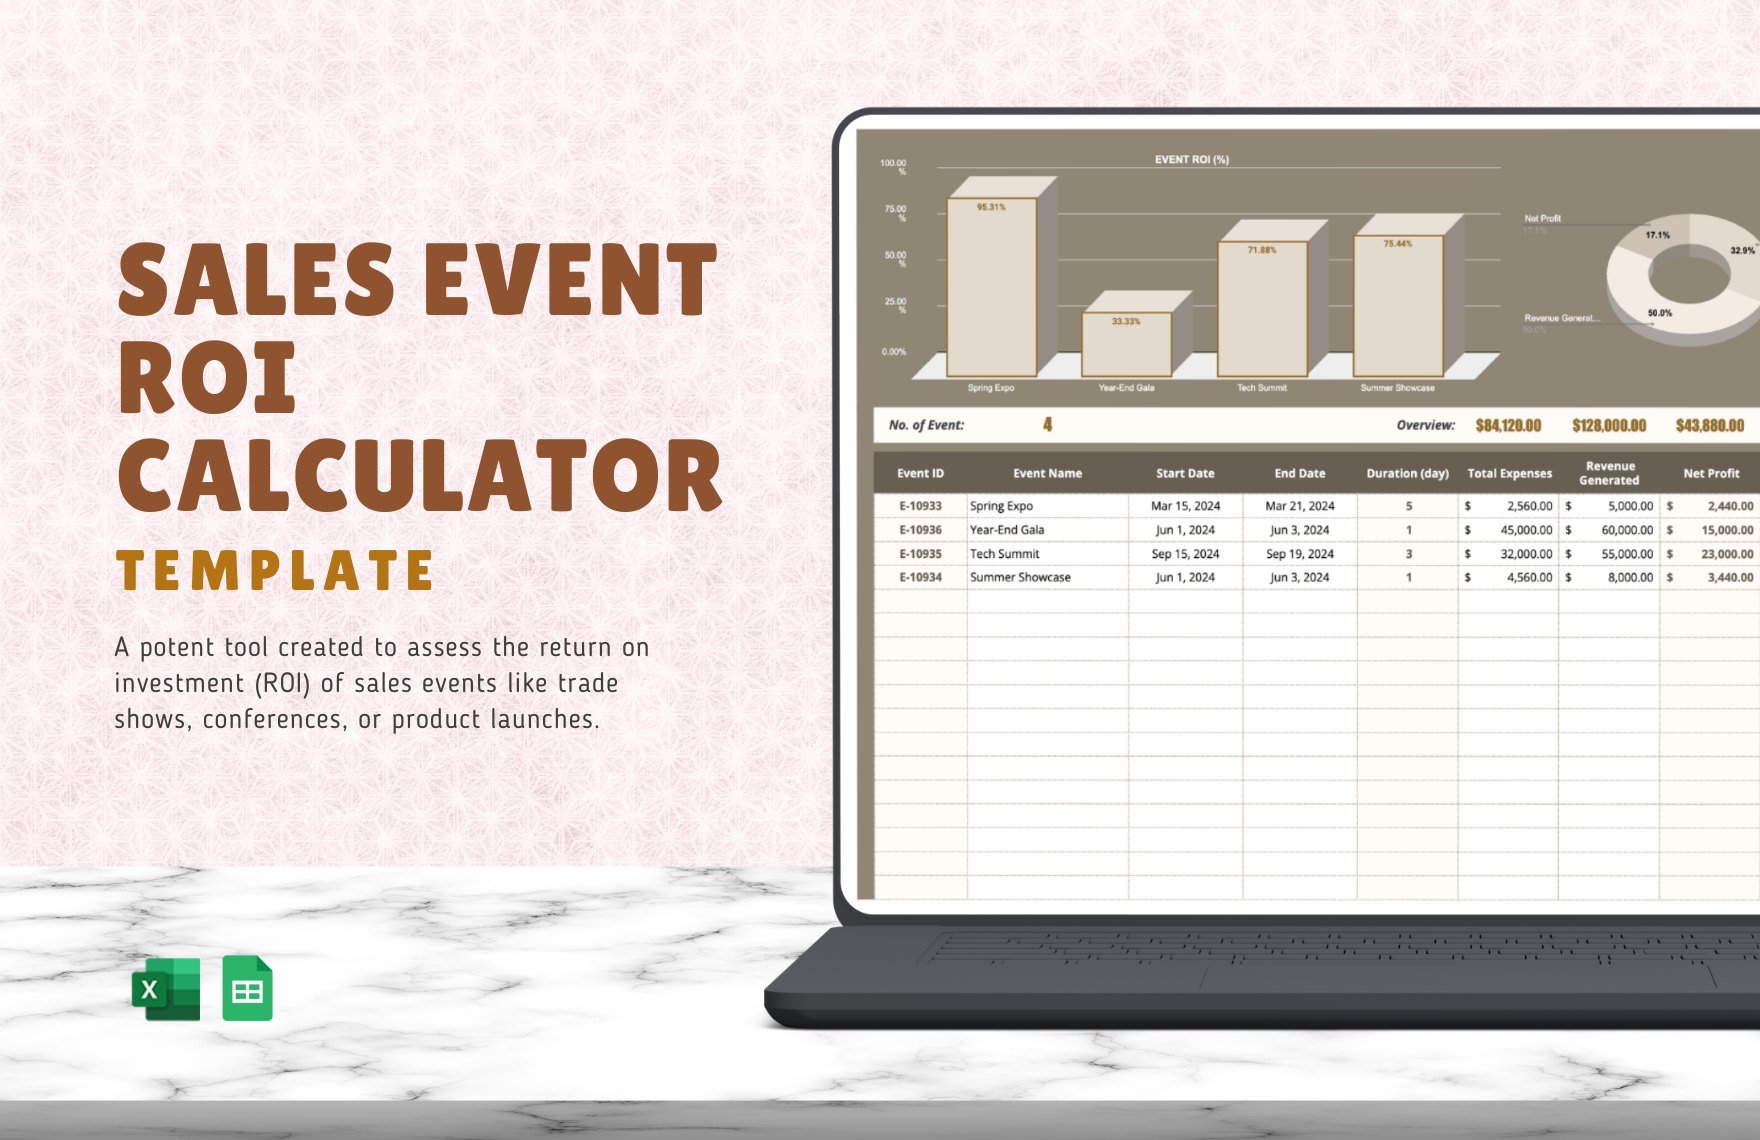 Sales Event ROI Calculator Template